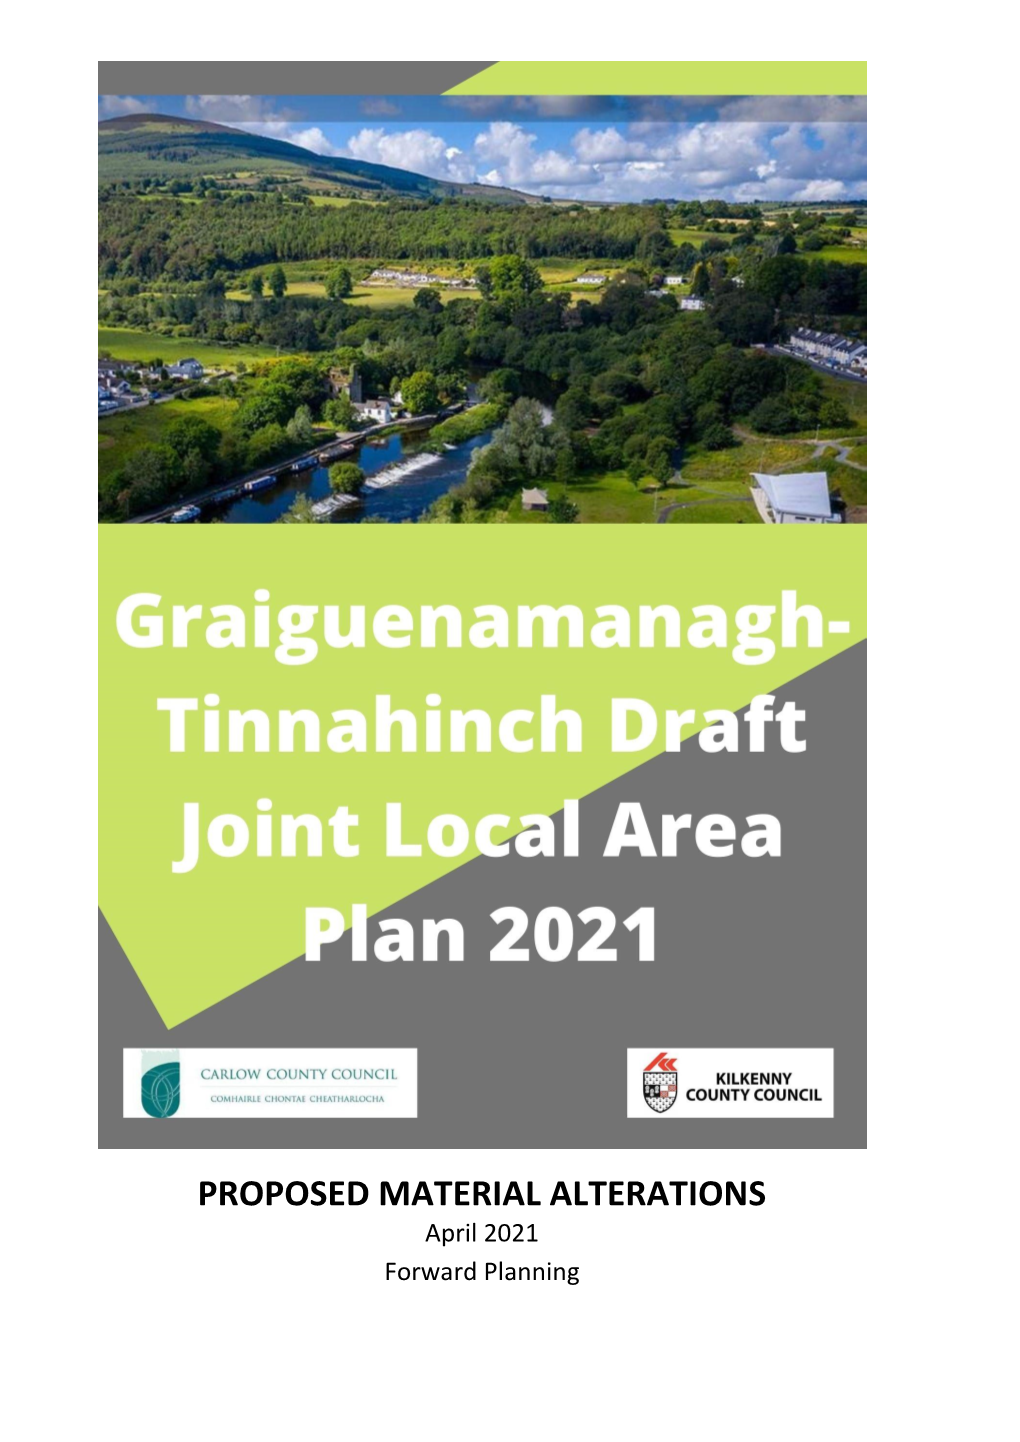 PROPOSED MATERIAL ALTERATIONS April 2021 Forward Planning Proposed Material Alterations to the Graiguenamanagh-Tinnahinch Draft Joint LAP 2021